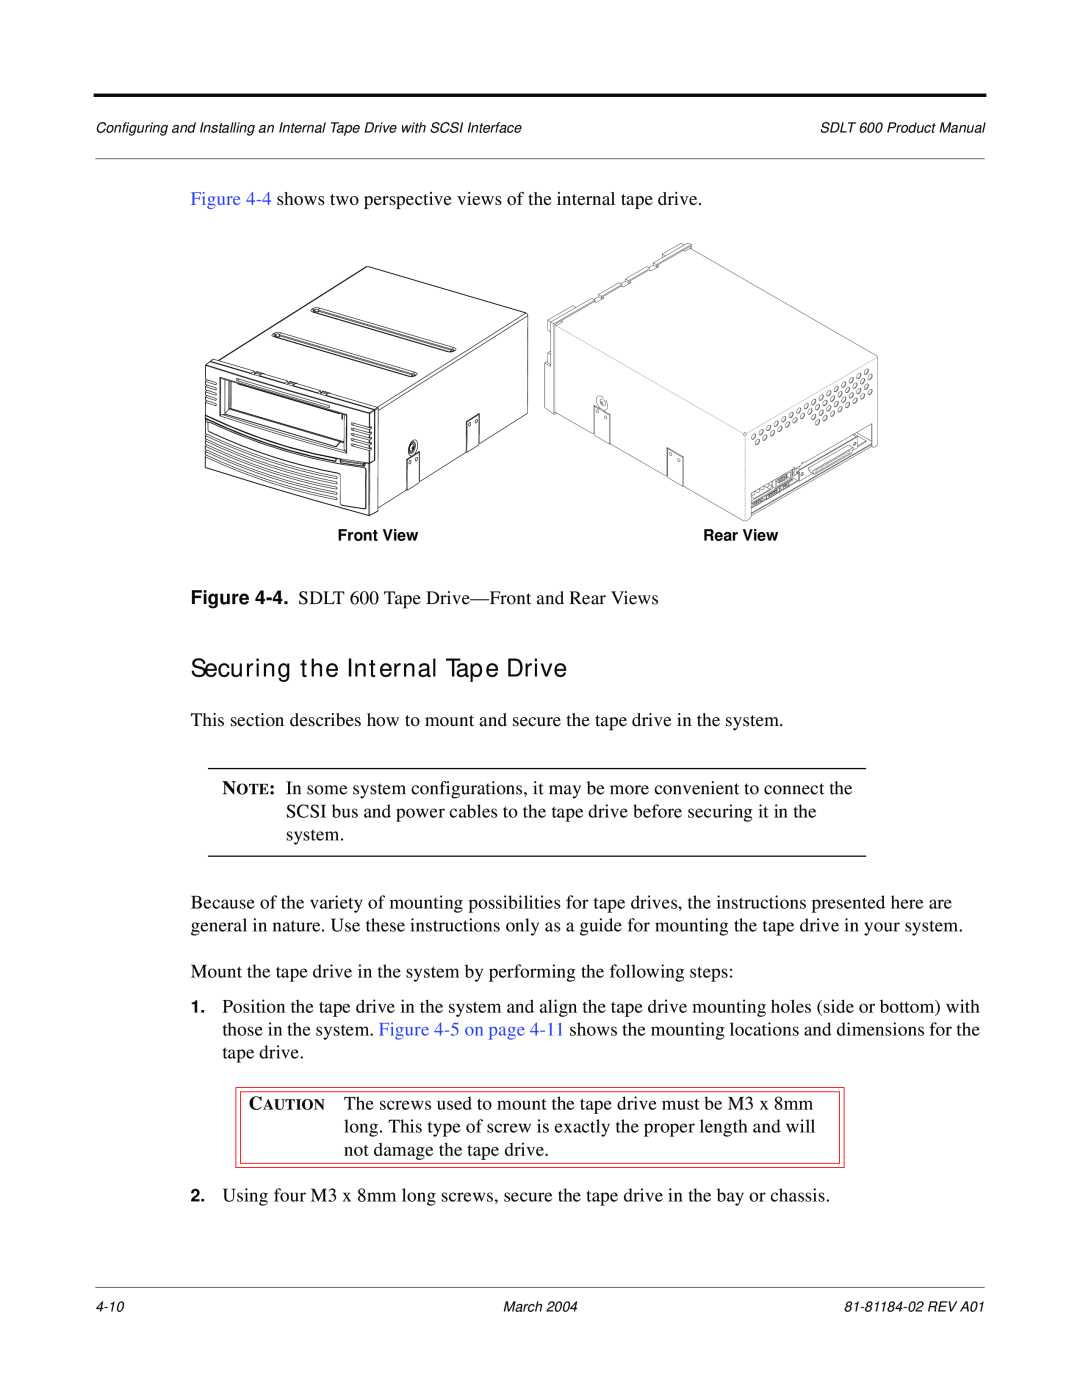 Tandberg Data 600 manual Securing the Internal Tape Drive 